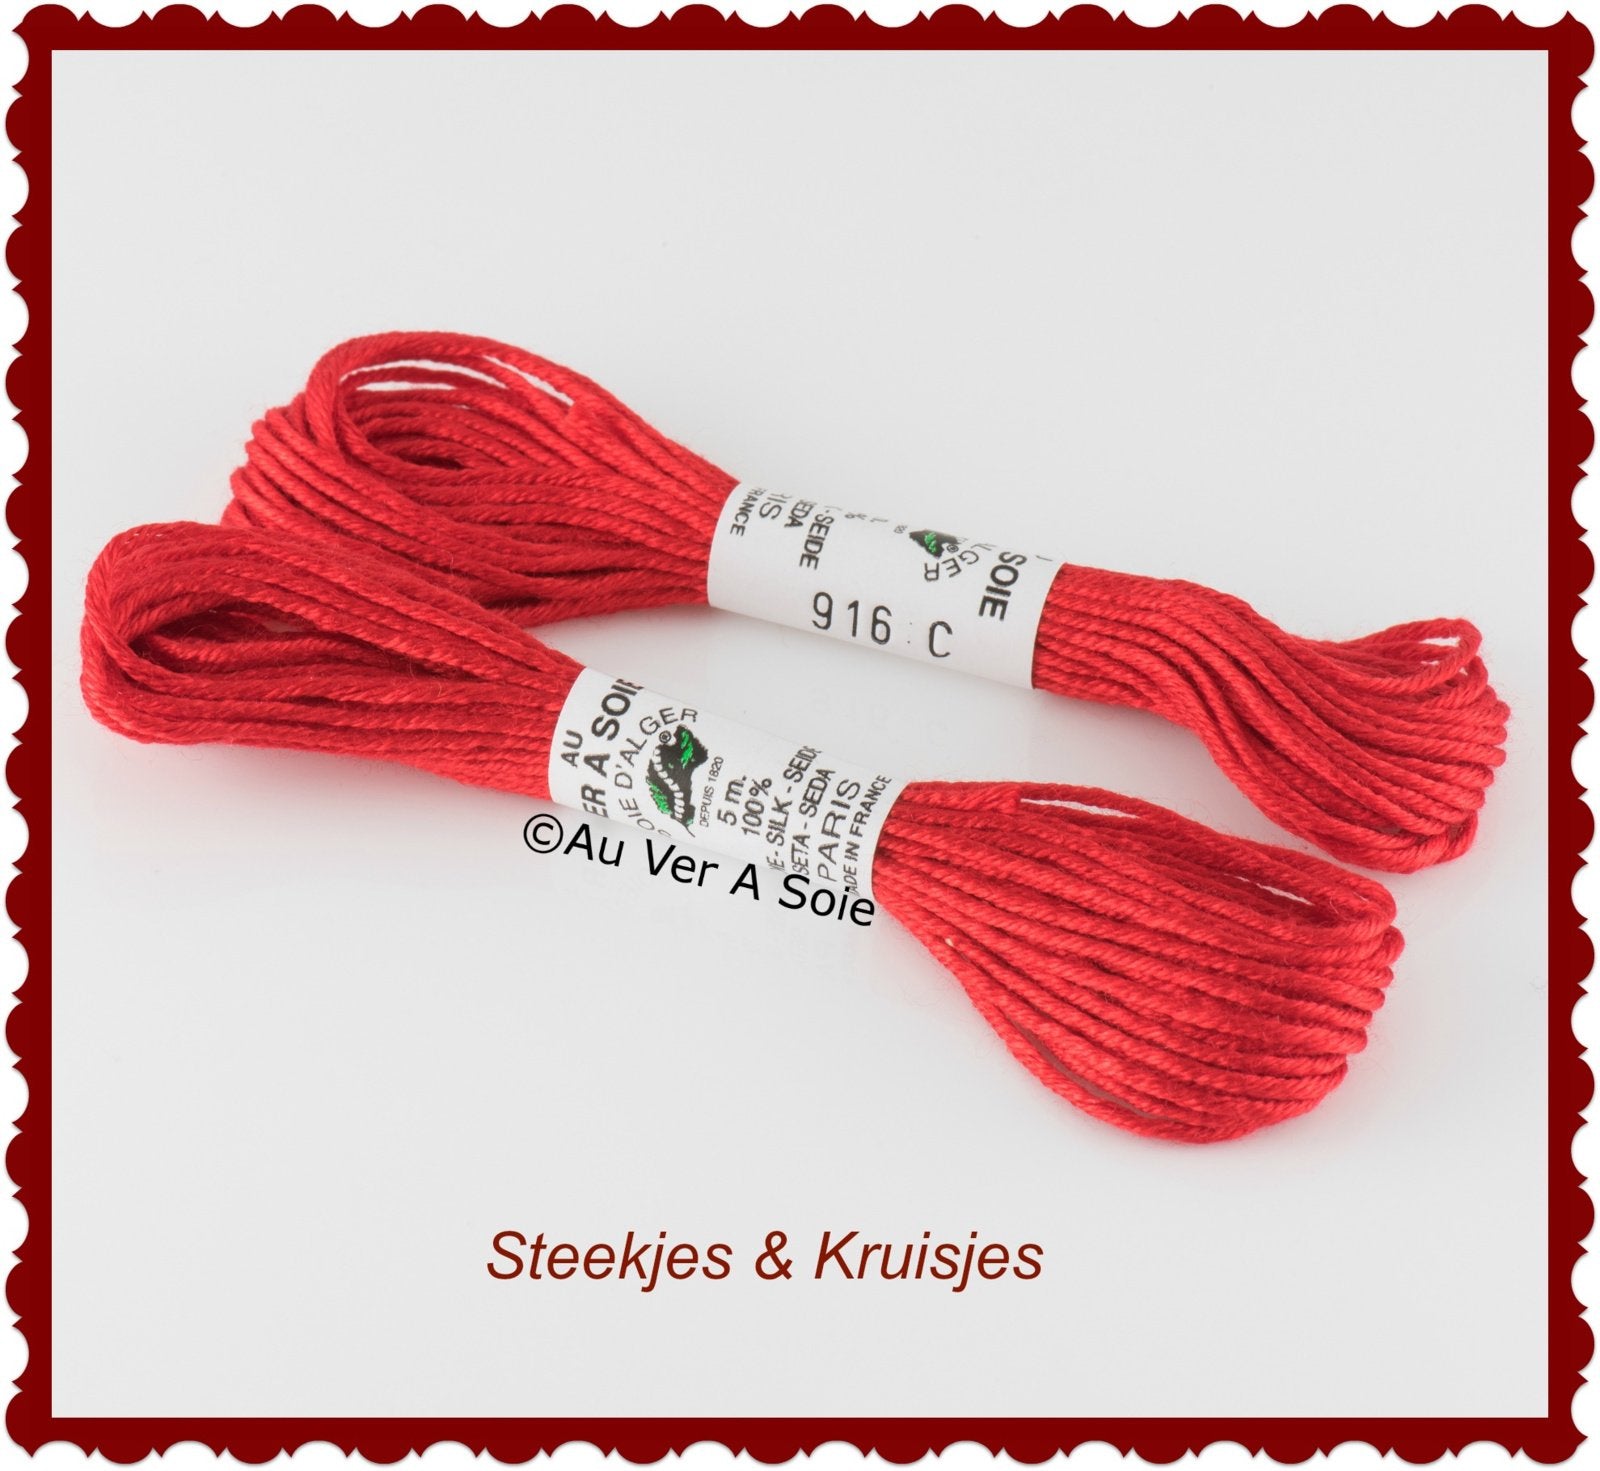 Au ver ie "soie d'alger" silk yarn color no. 916